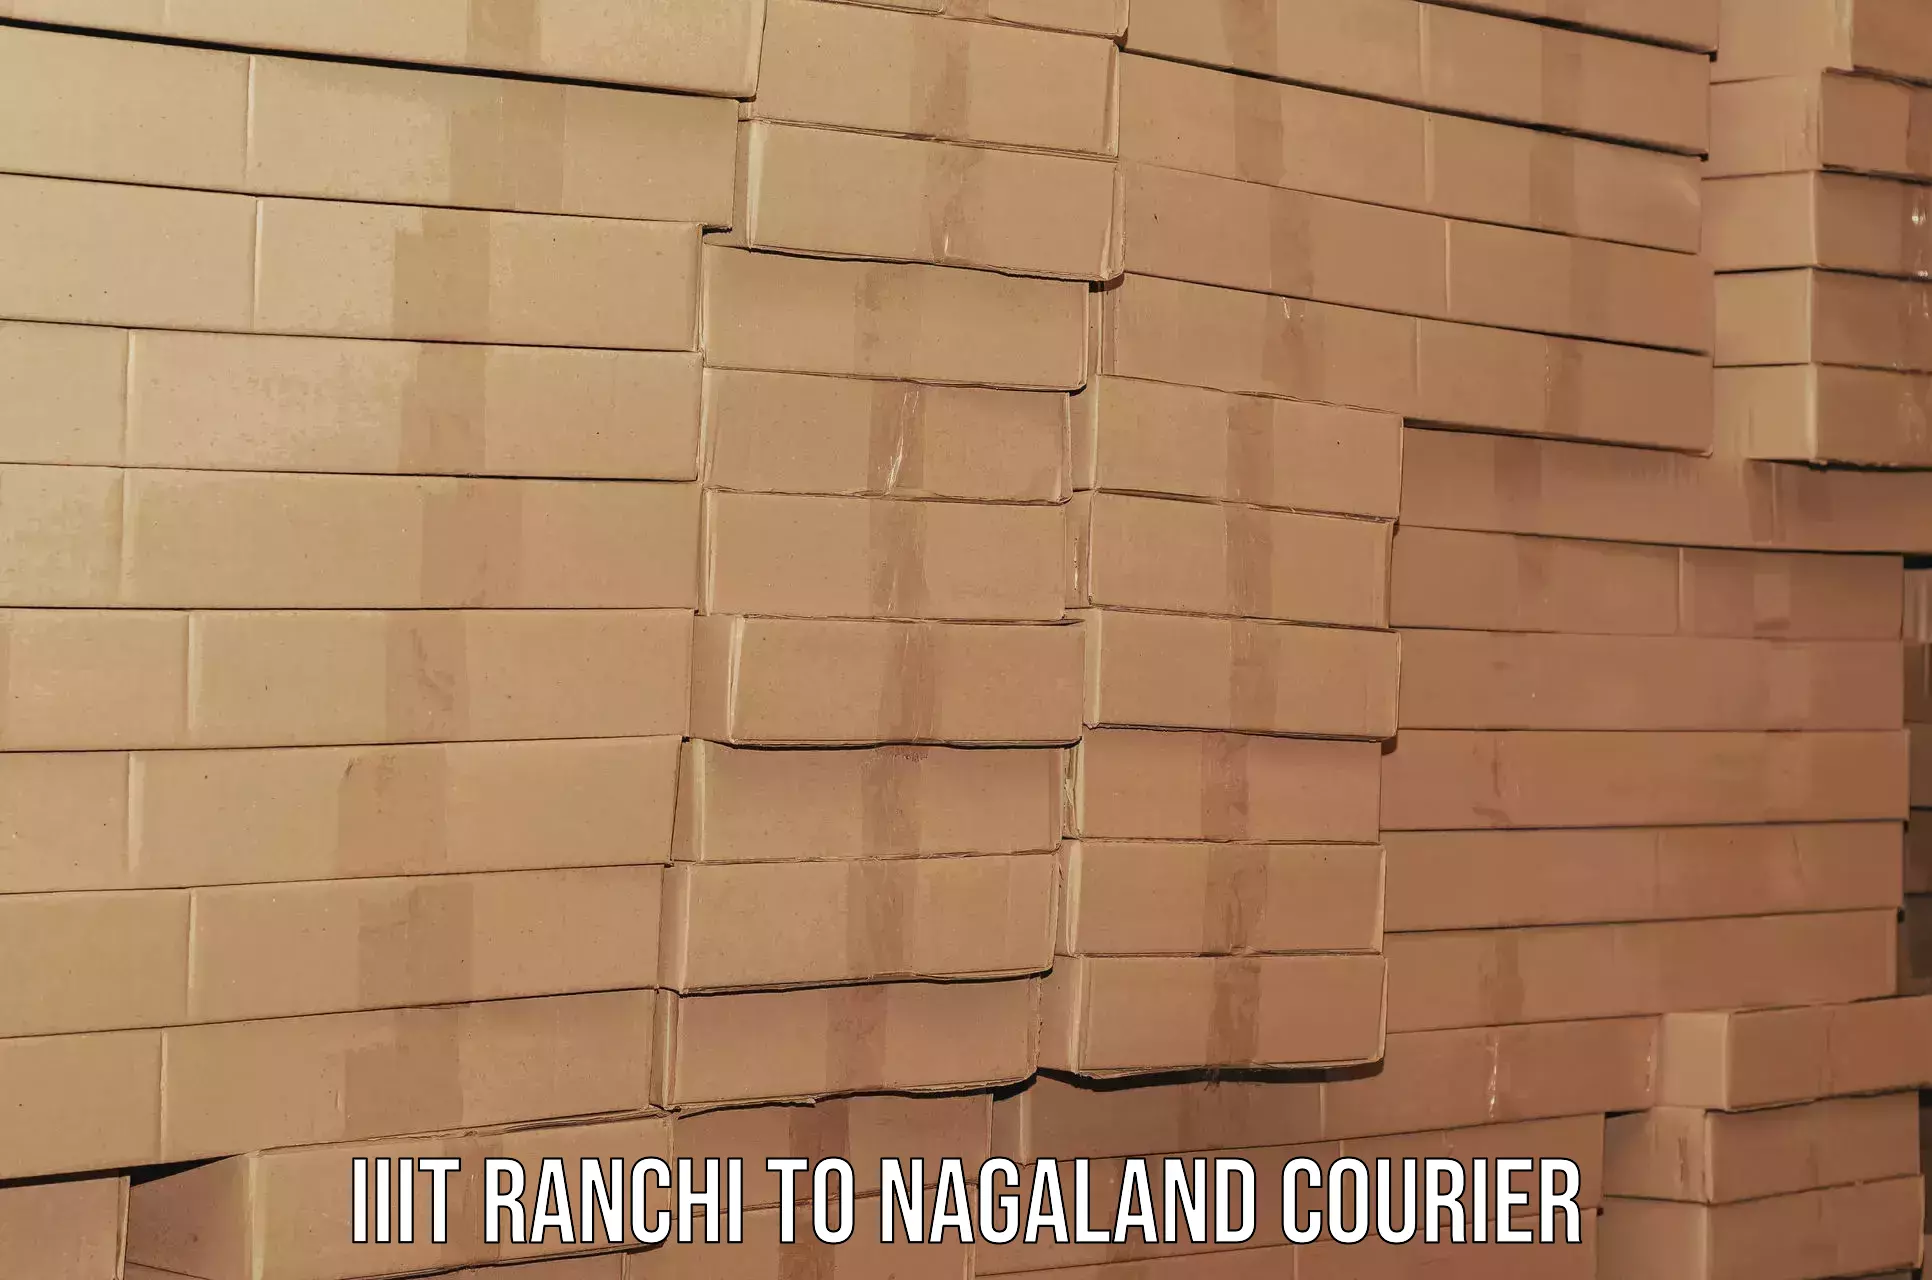 Trusted moving company IIIT Ranchi to Nagaland